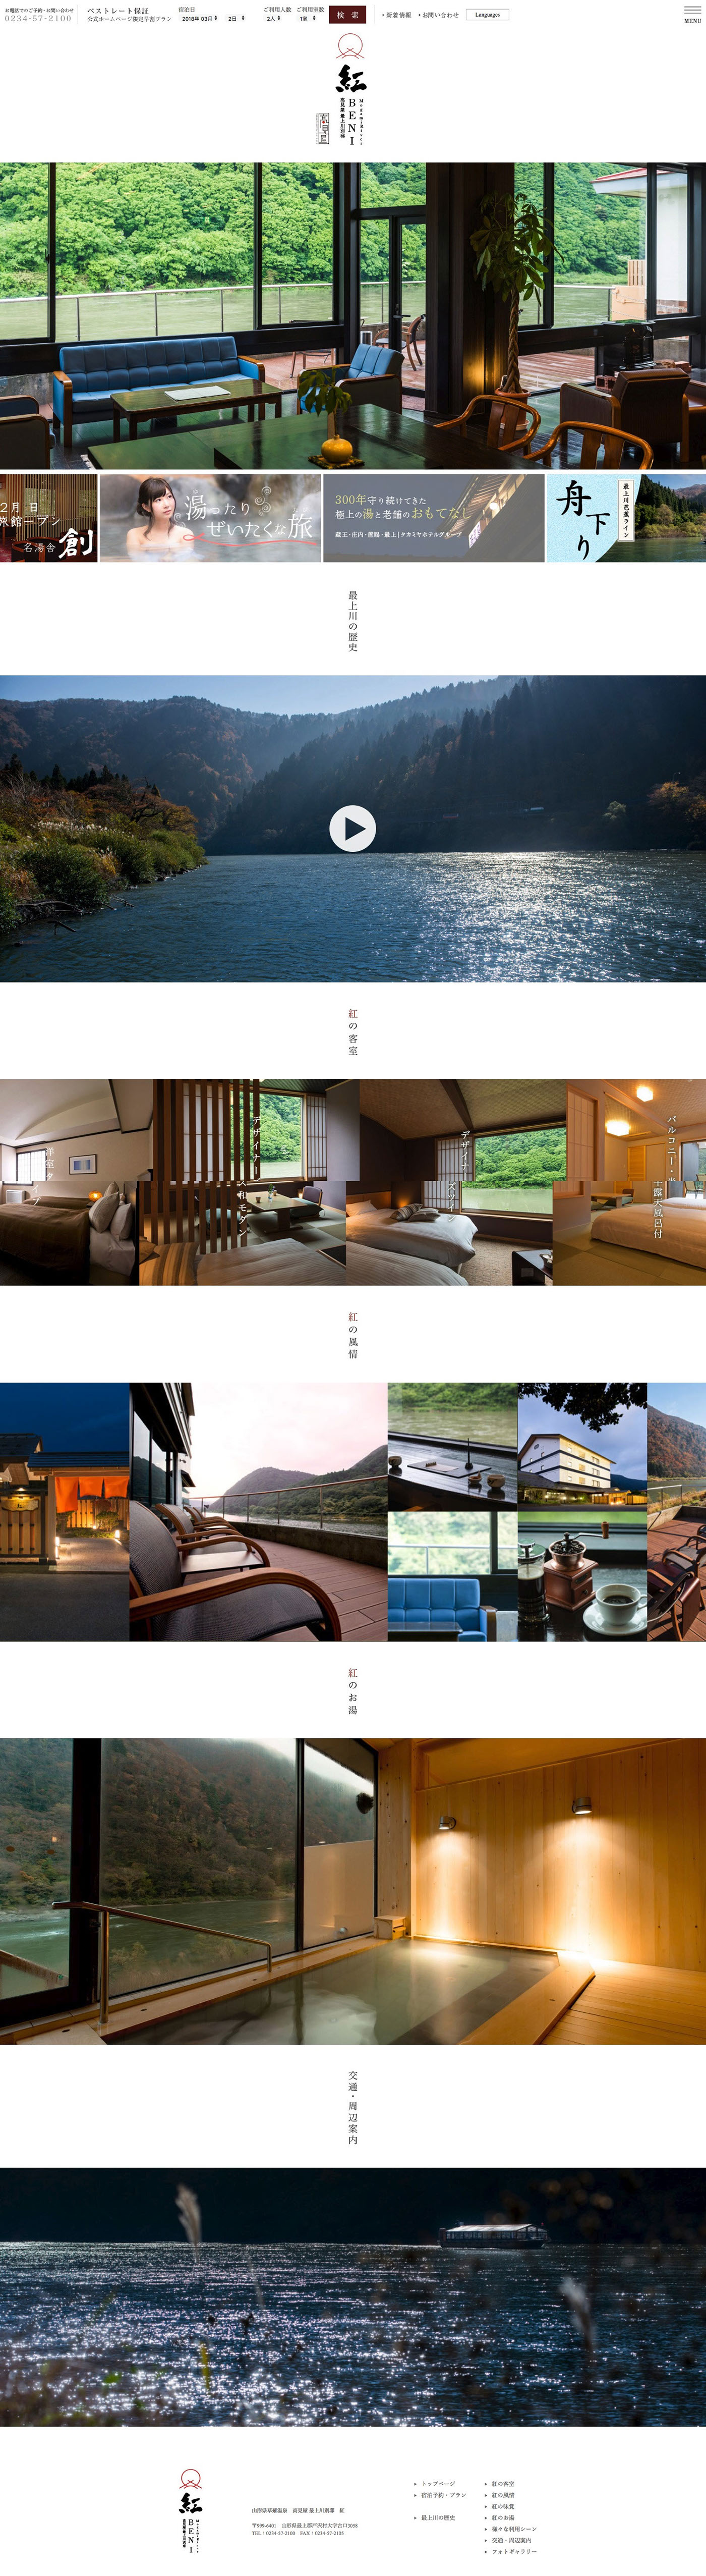 japan hotspring sightseeing hotel ryokan Travel Spot Web